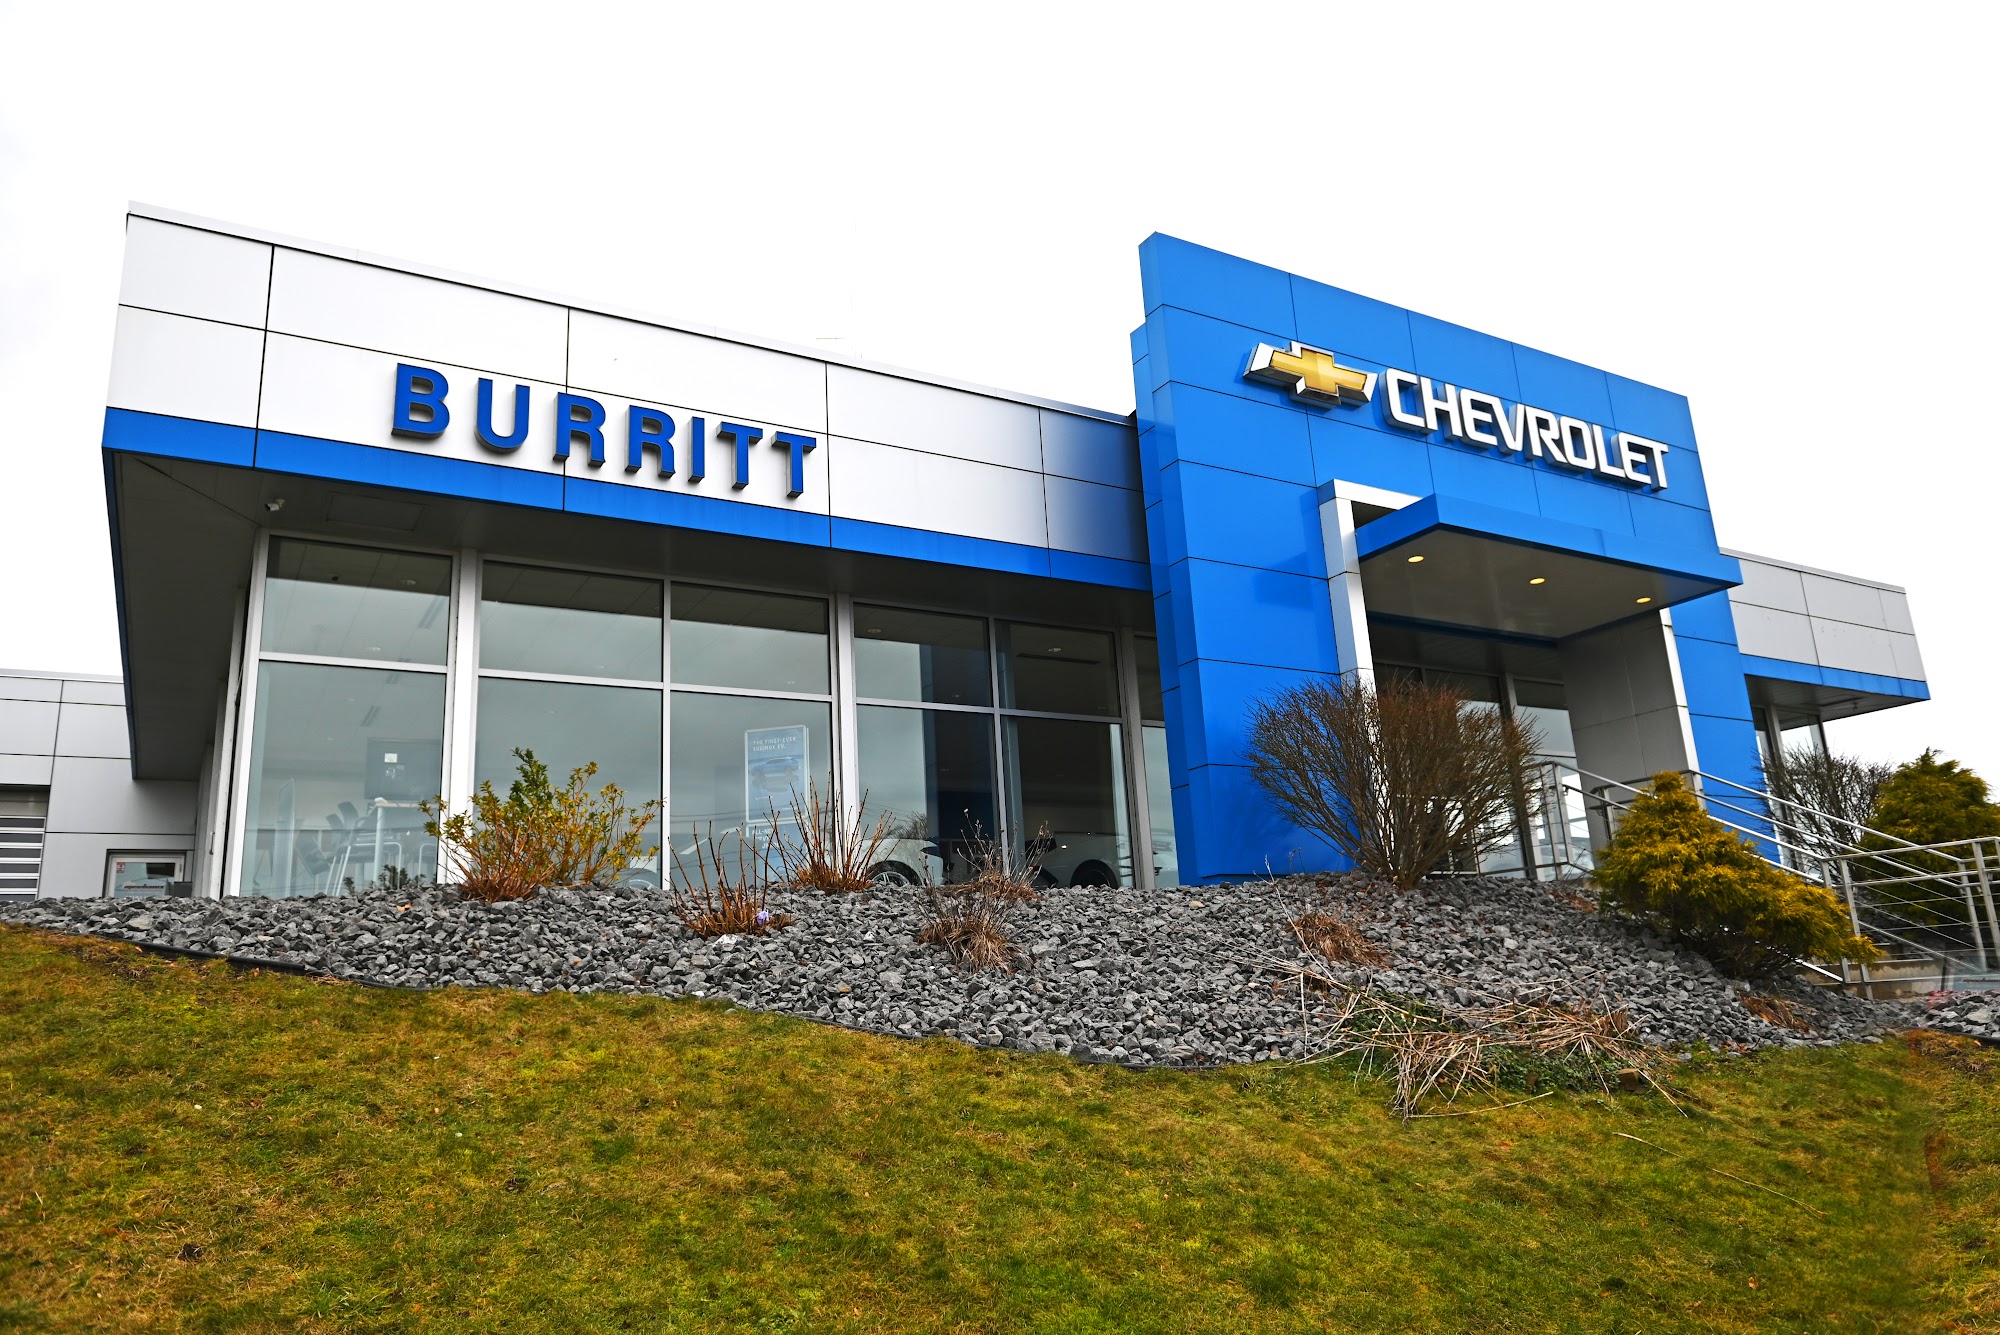 Burritt Motors